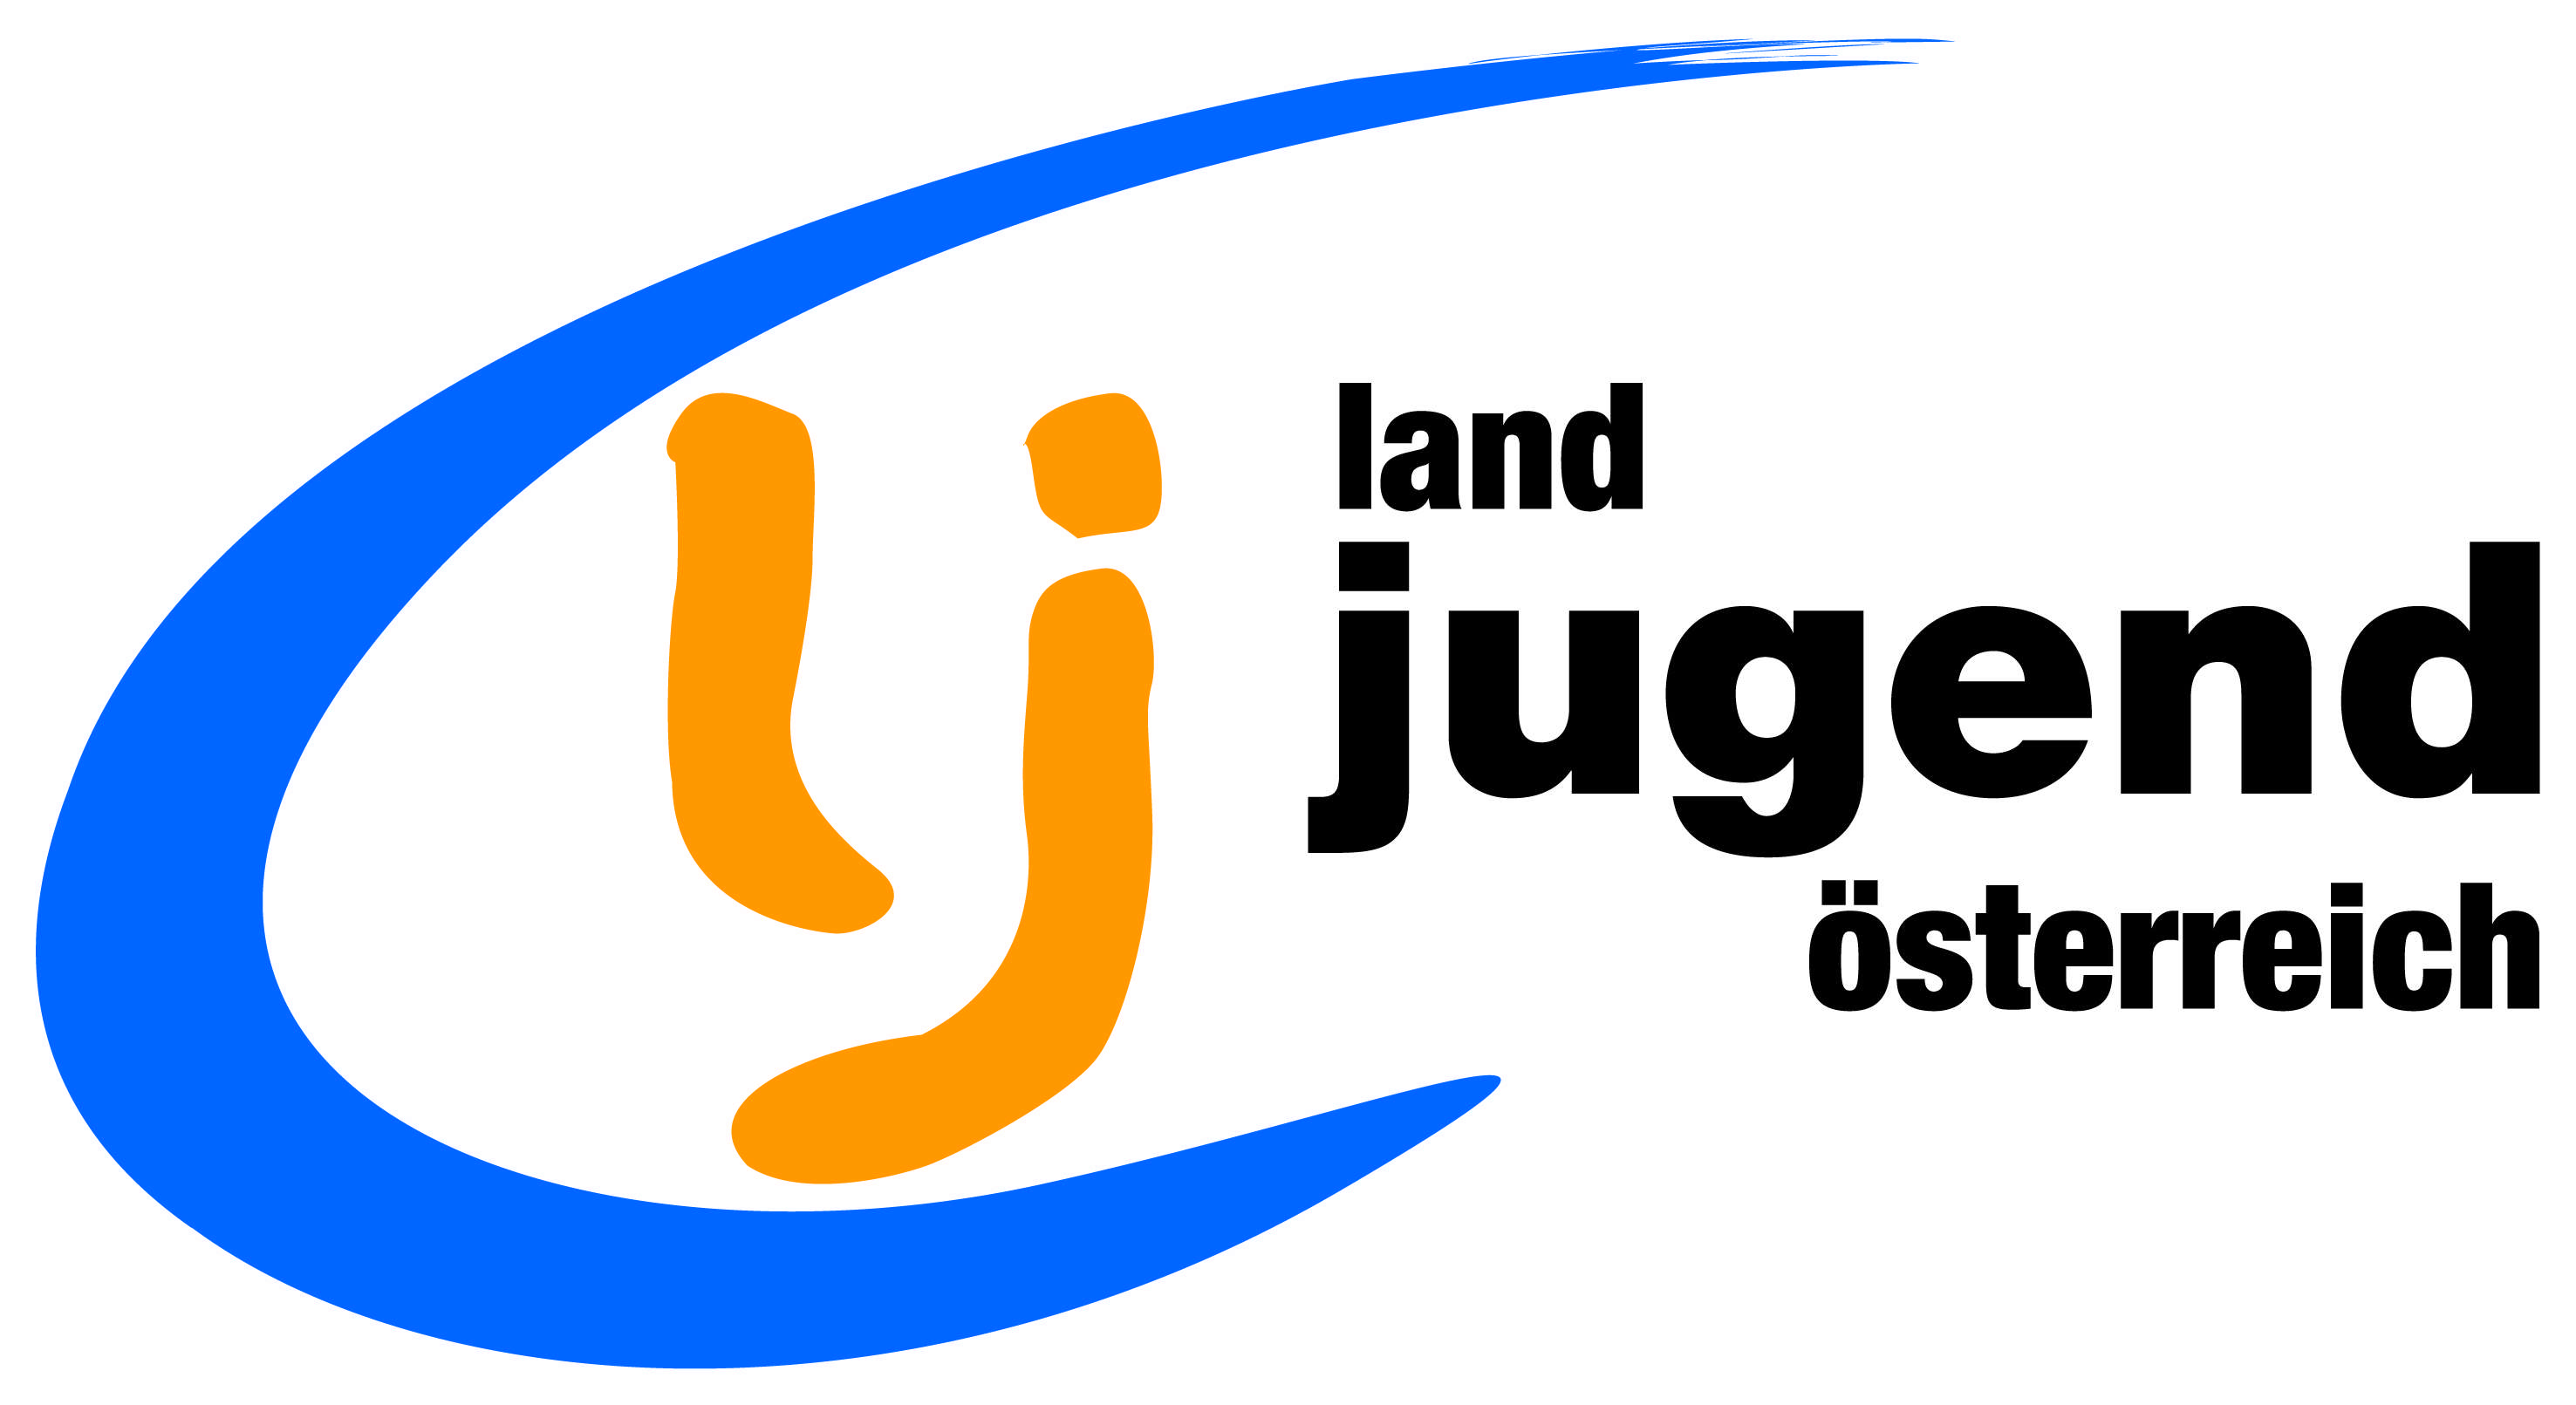 Rural Youth Lj österreich Logo